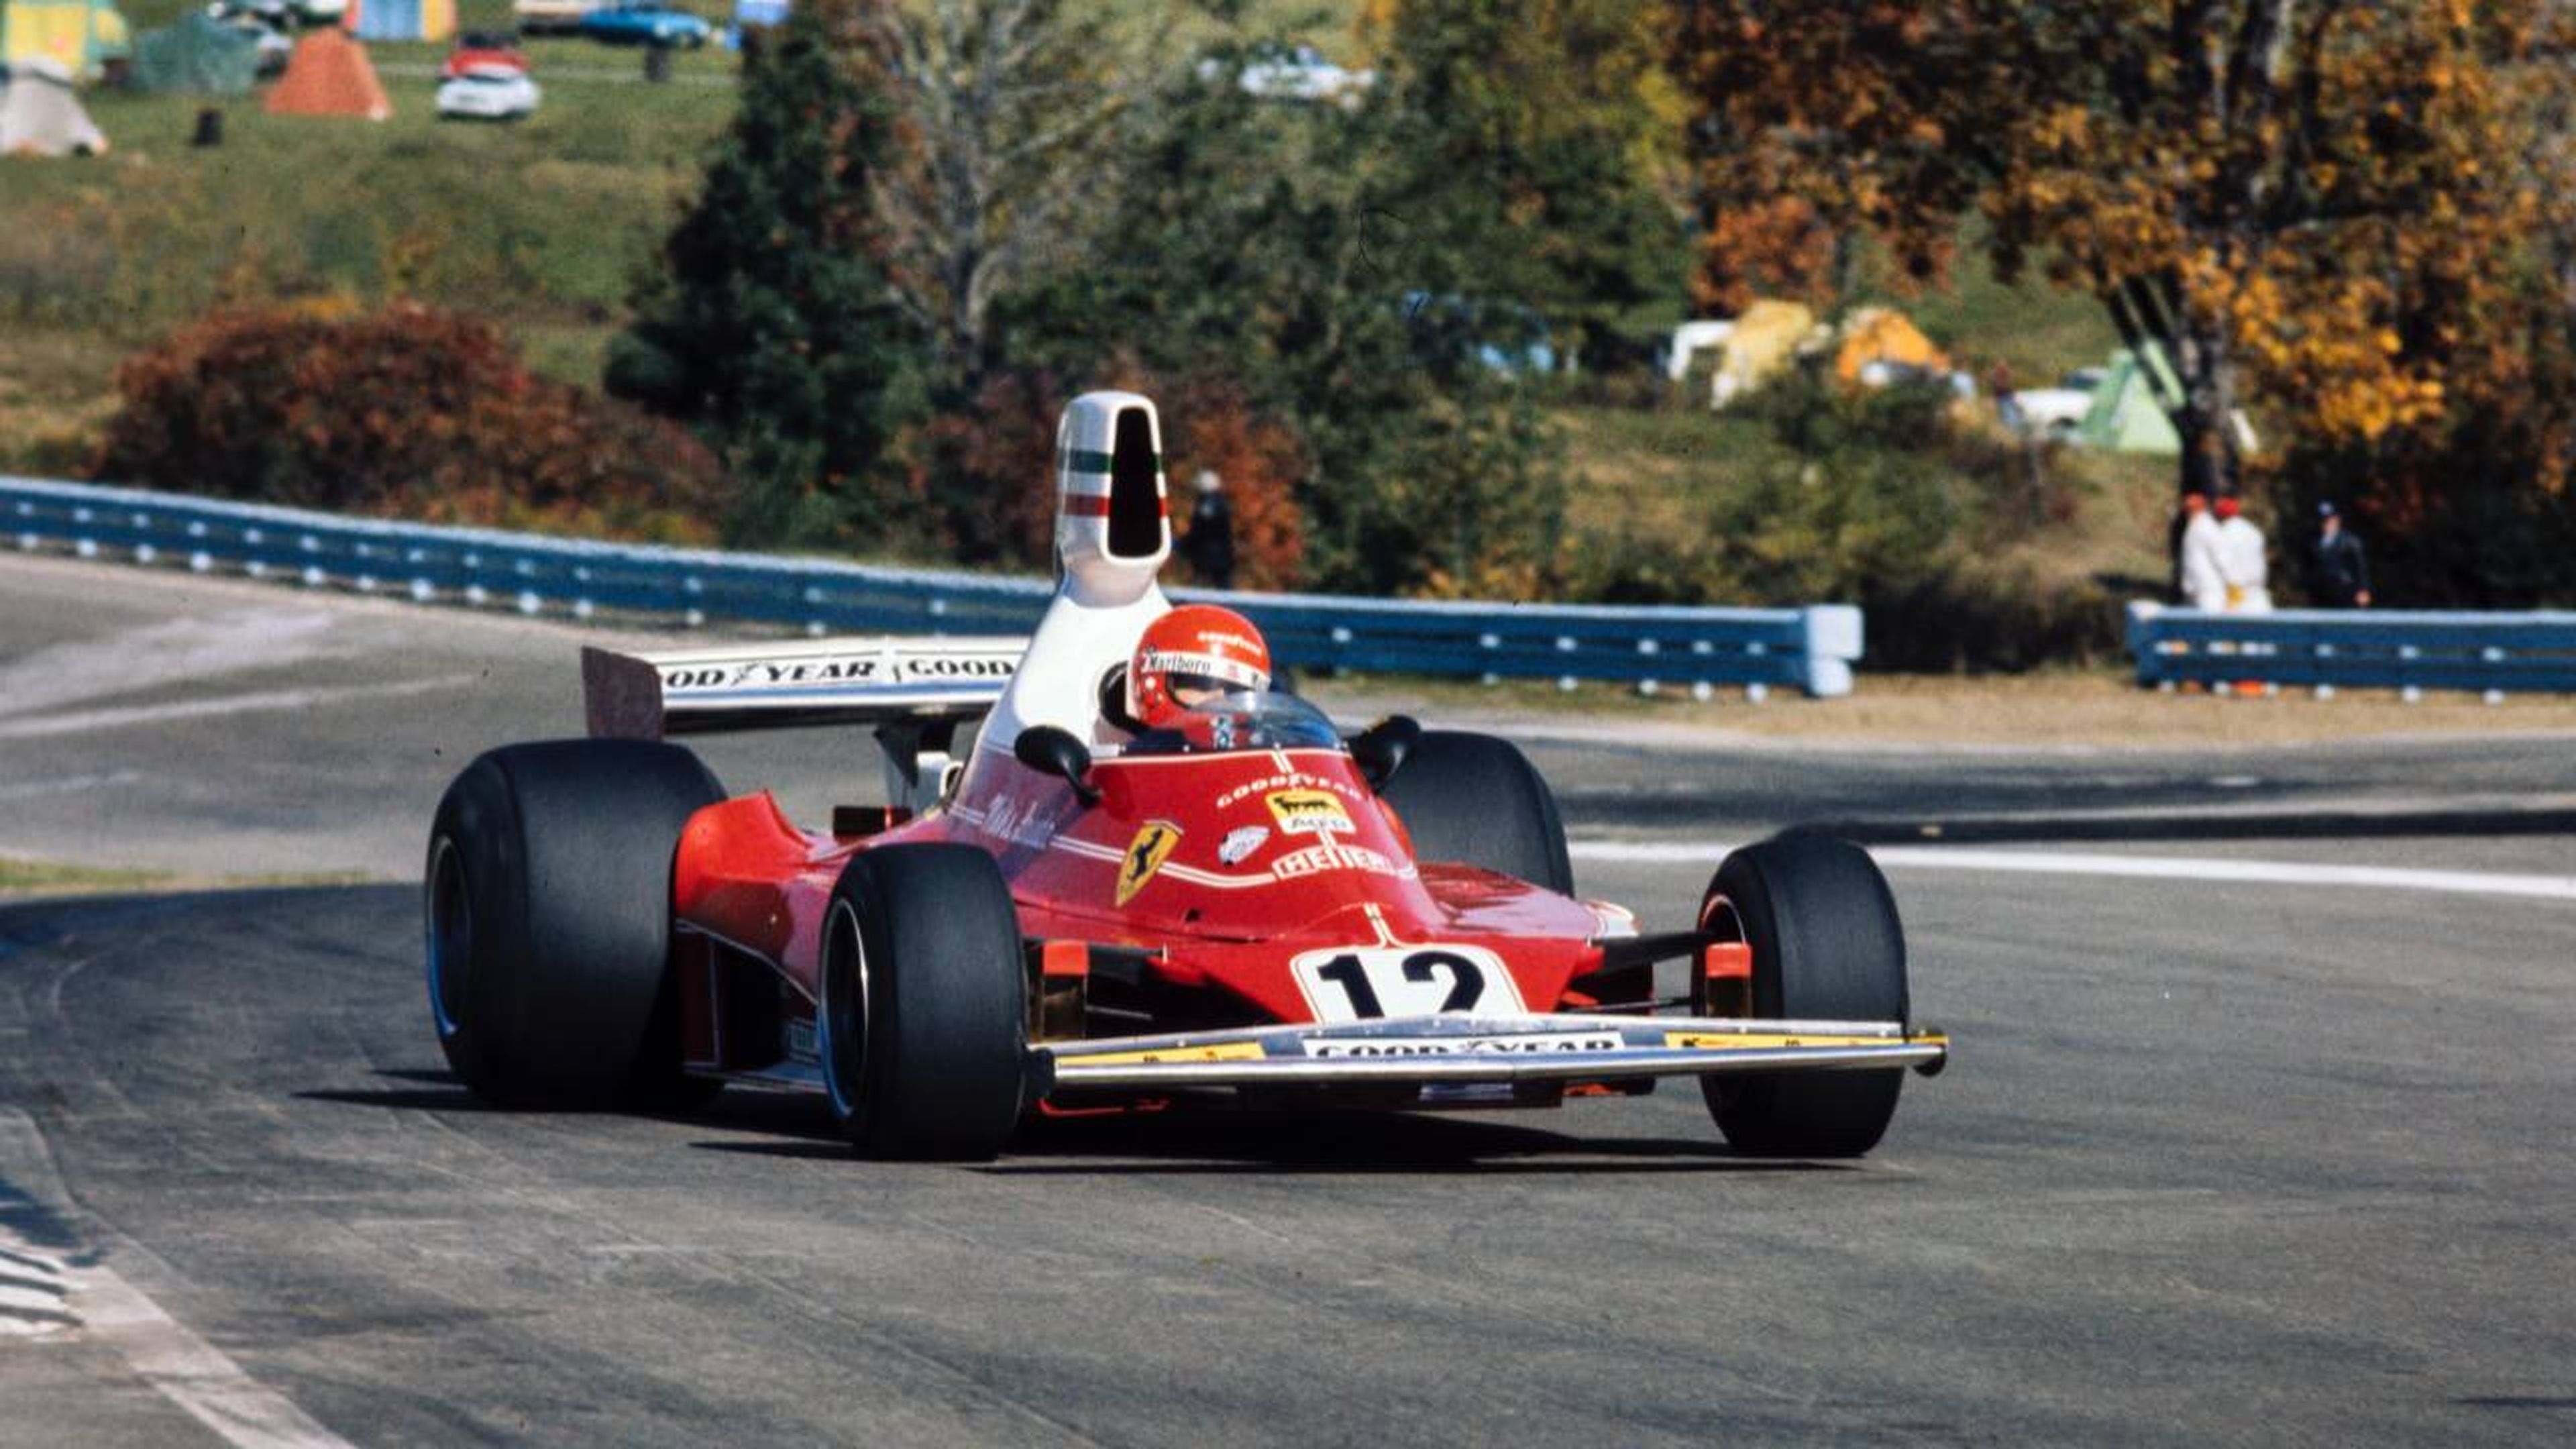 Ferrari 312T Niki Lauda